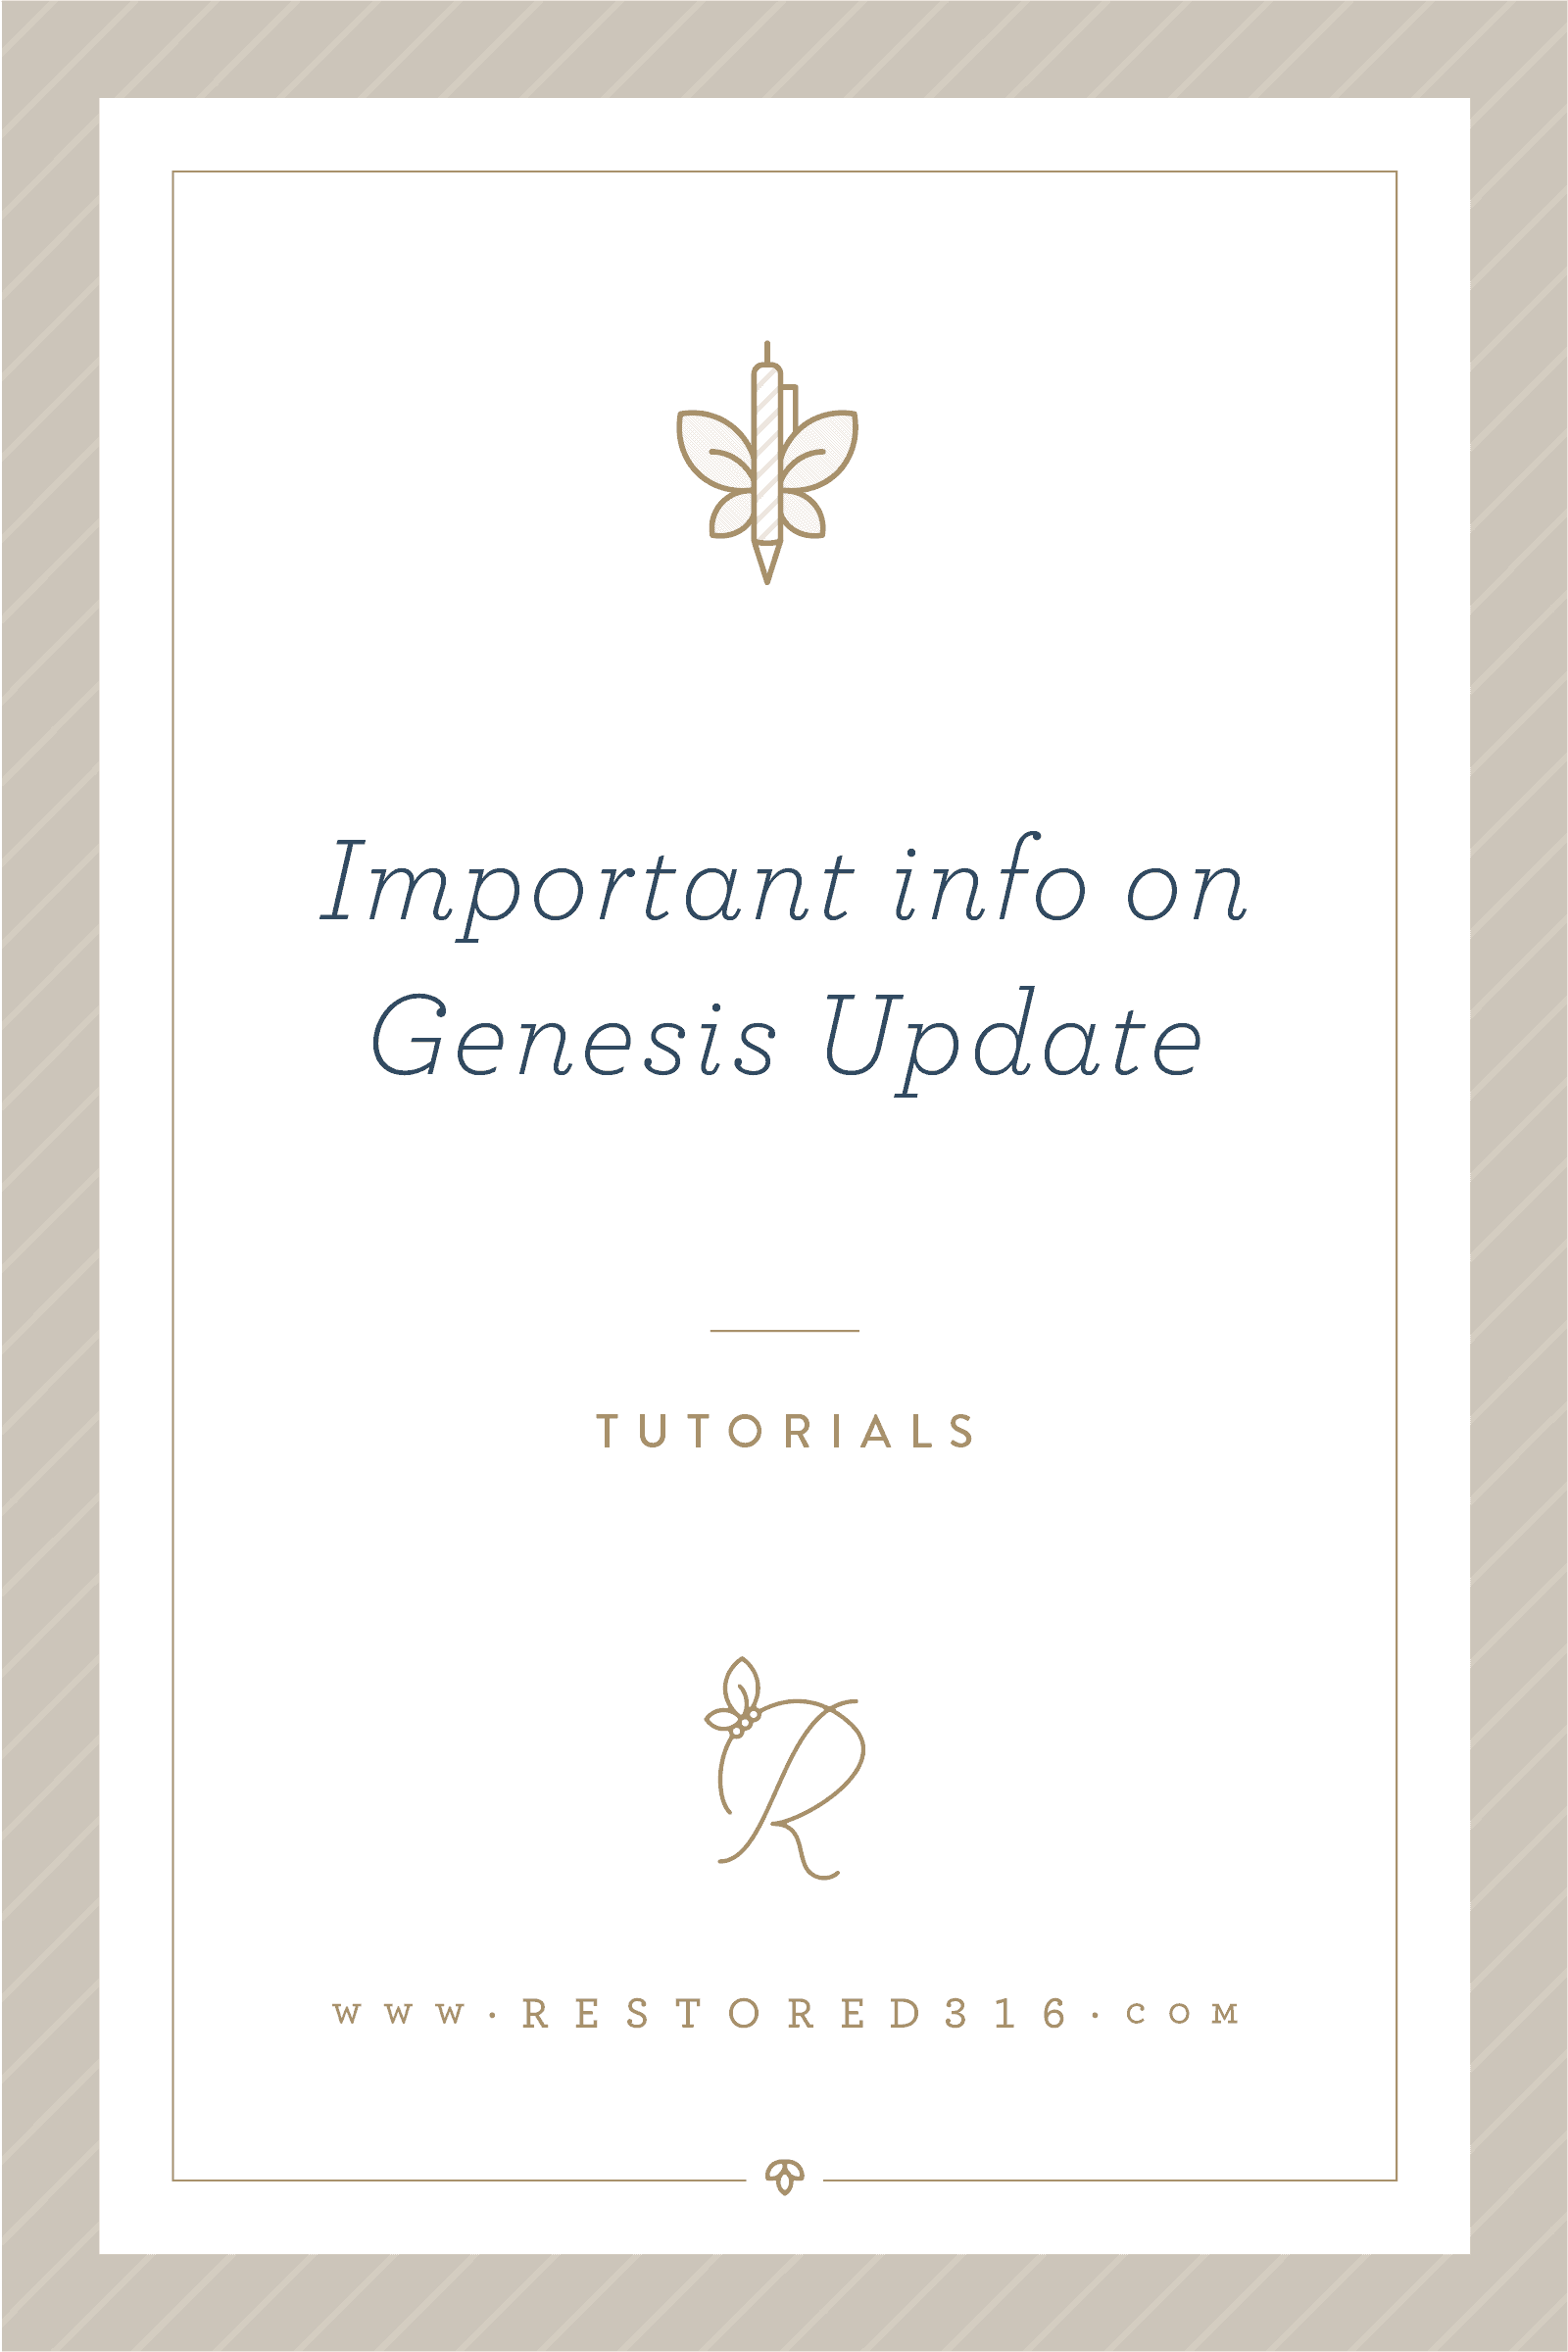 IMPORTANT info on Genesis Update